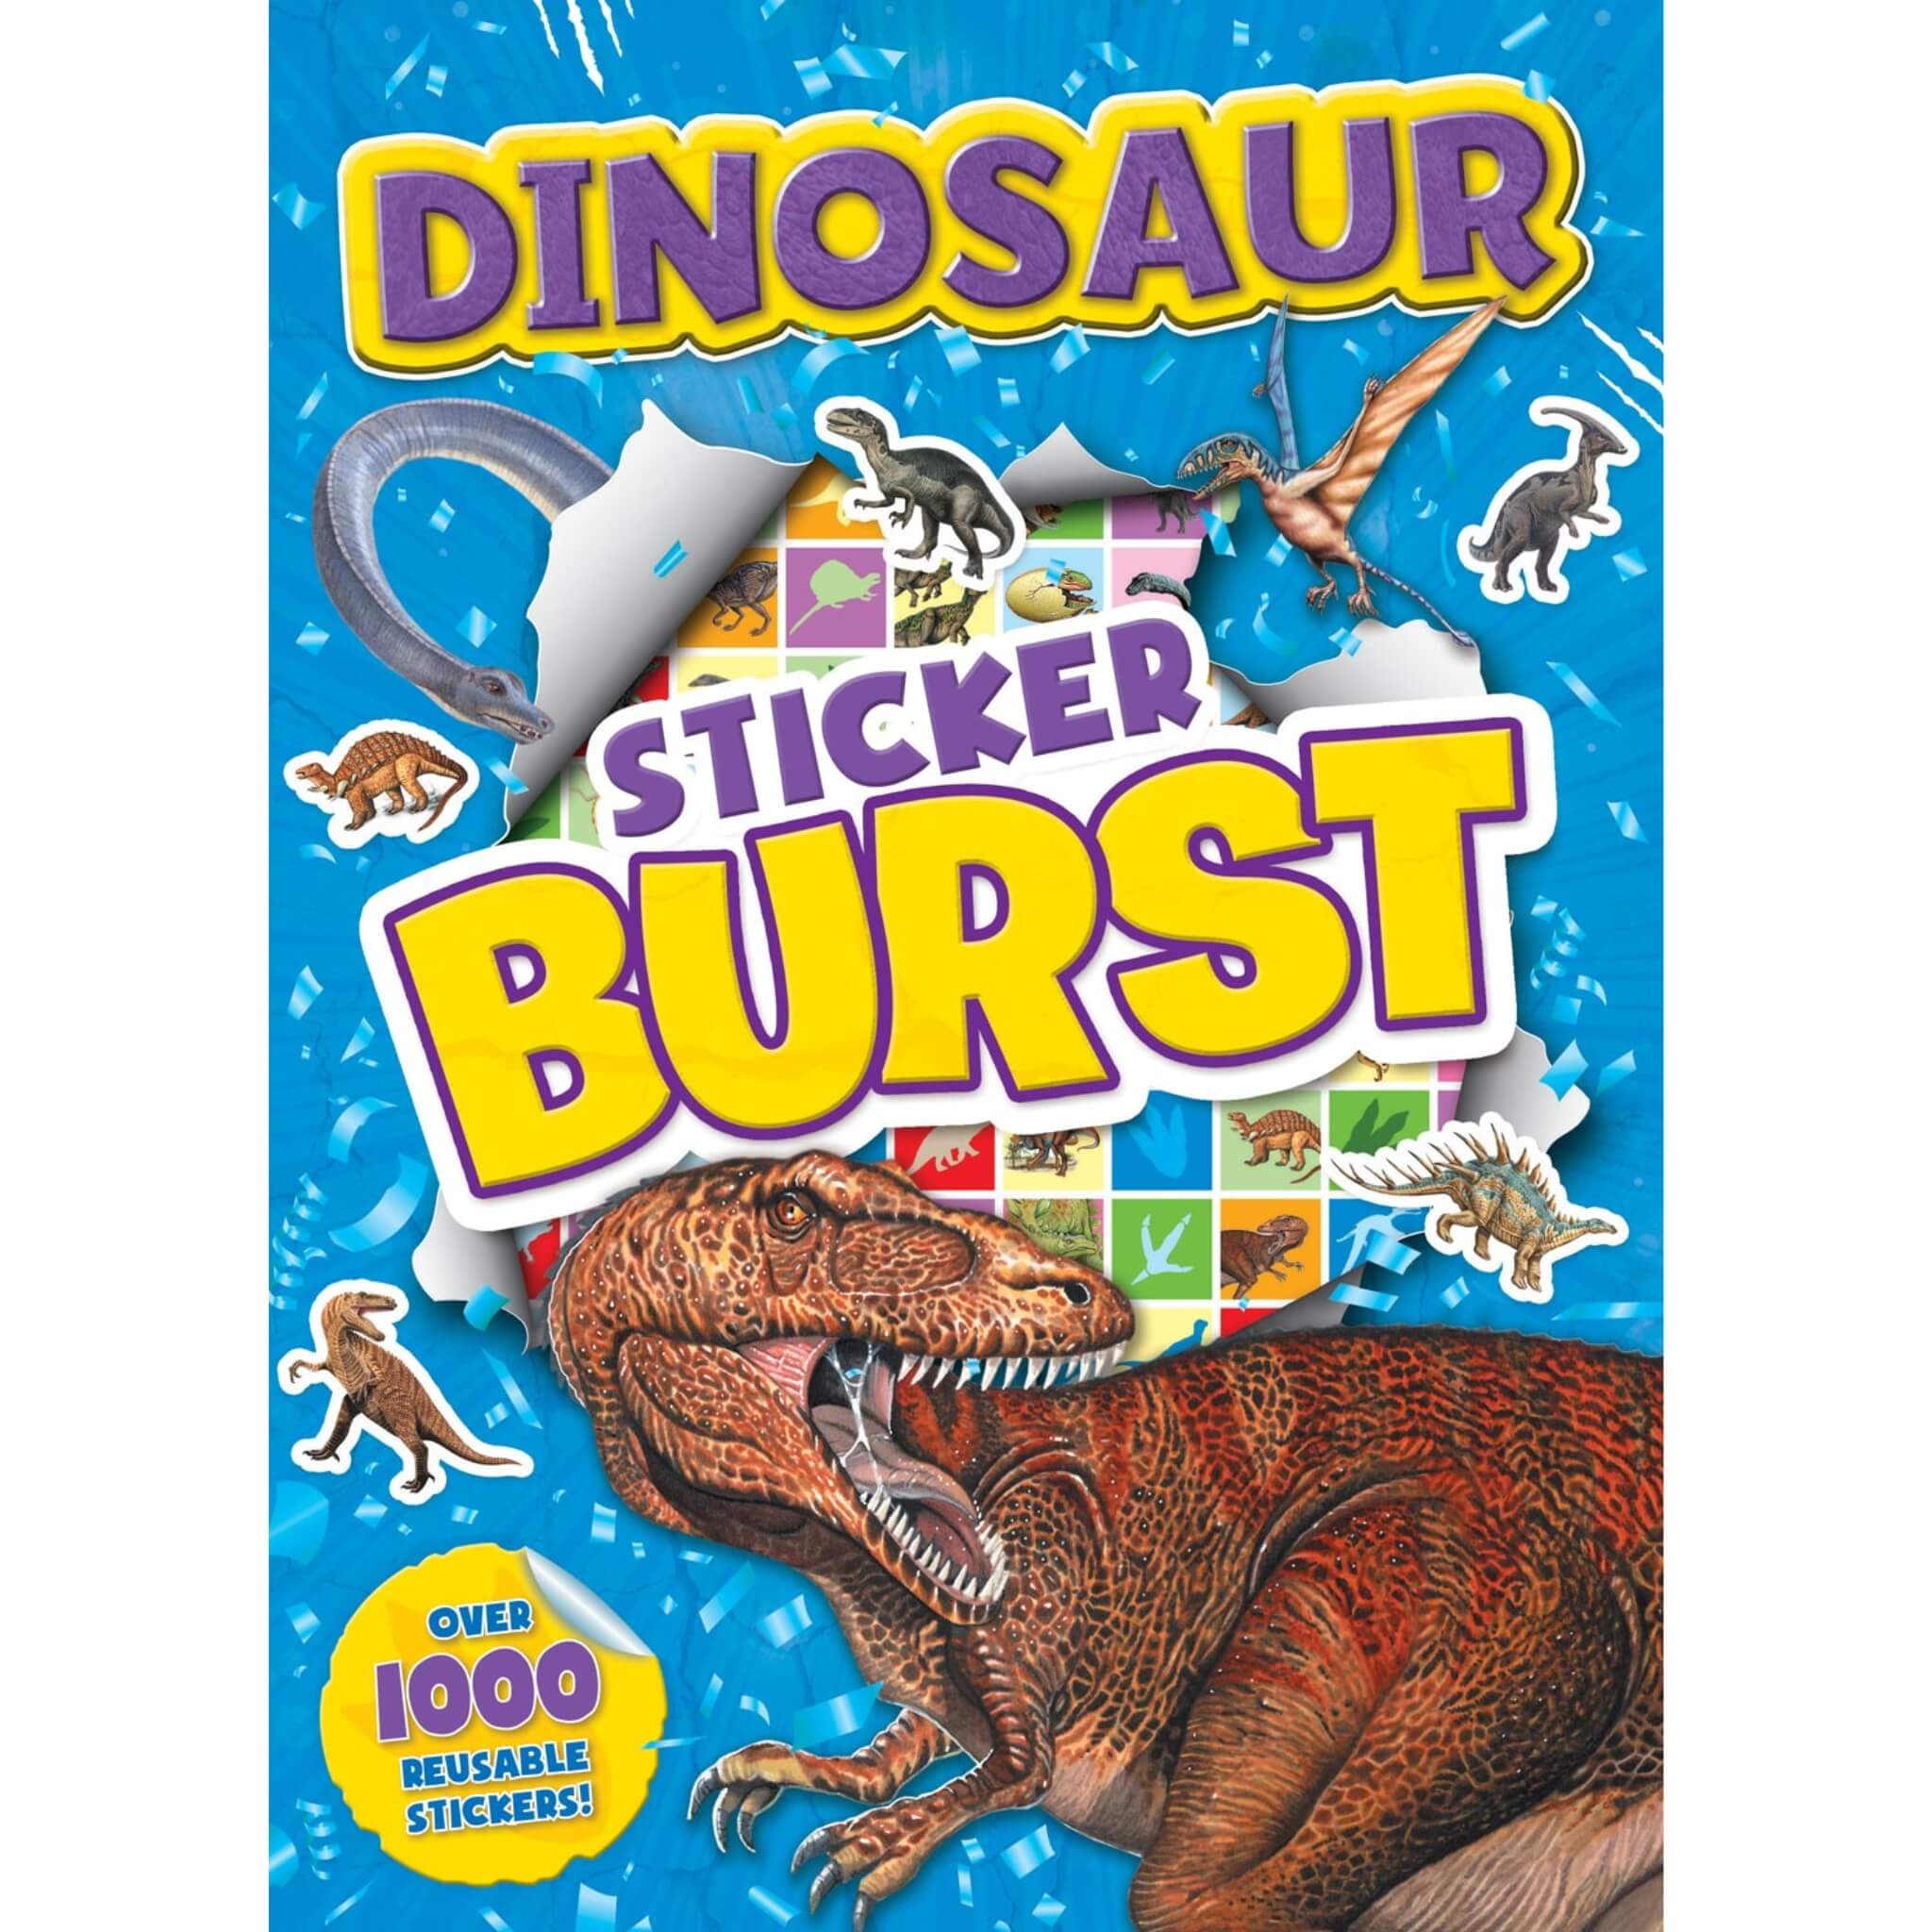 Dinosaur-Sticker-Burst